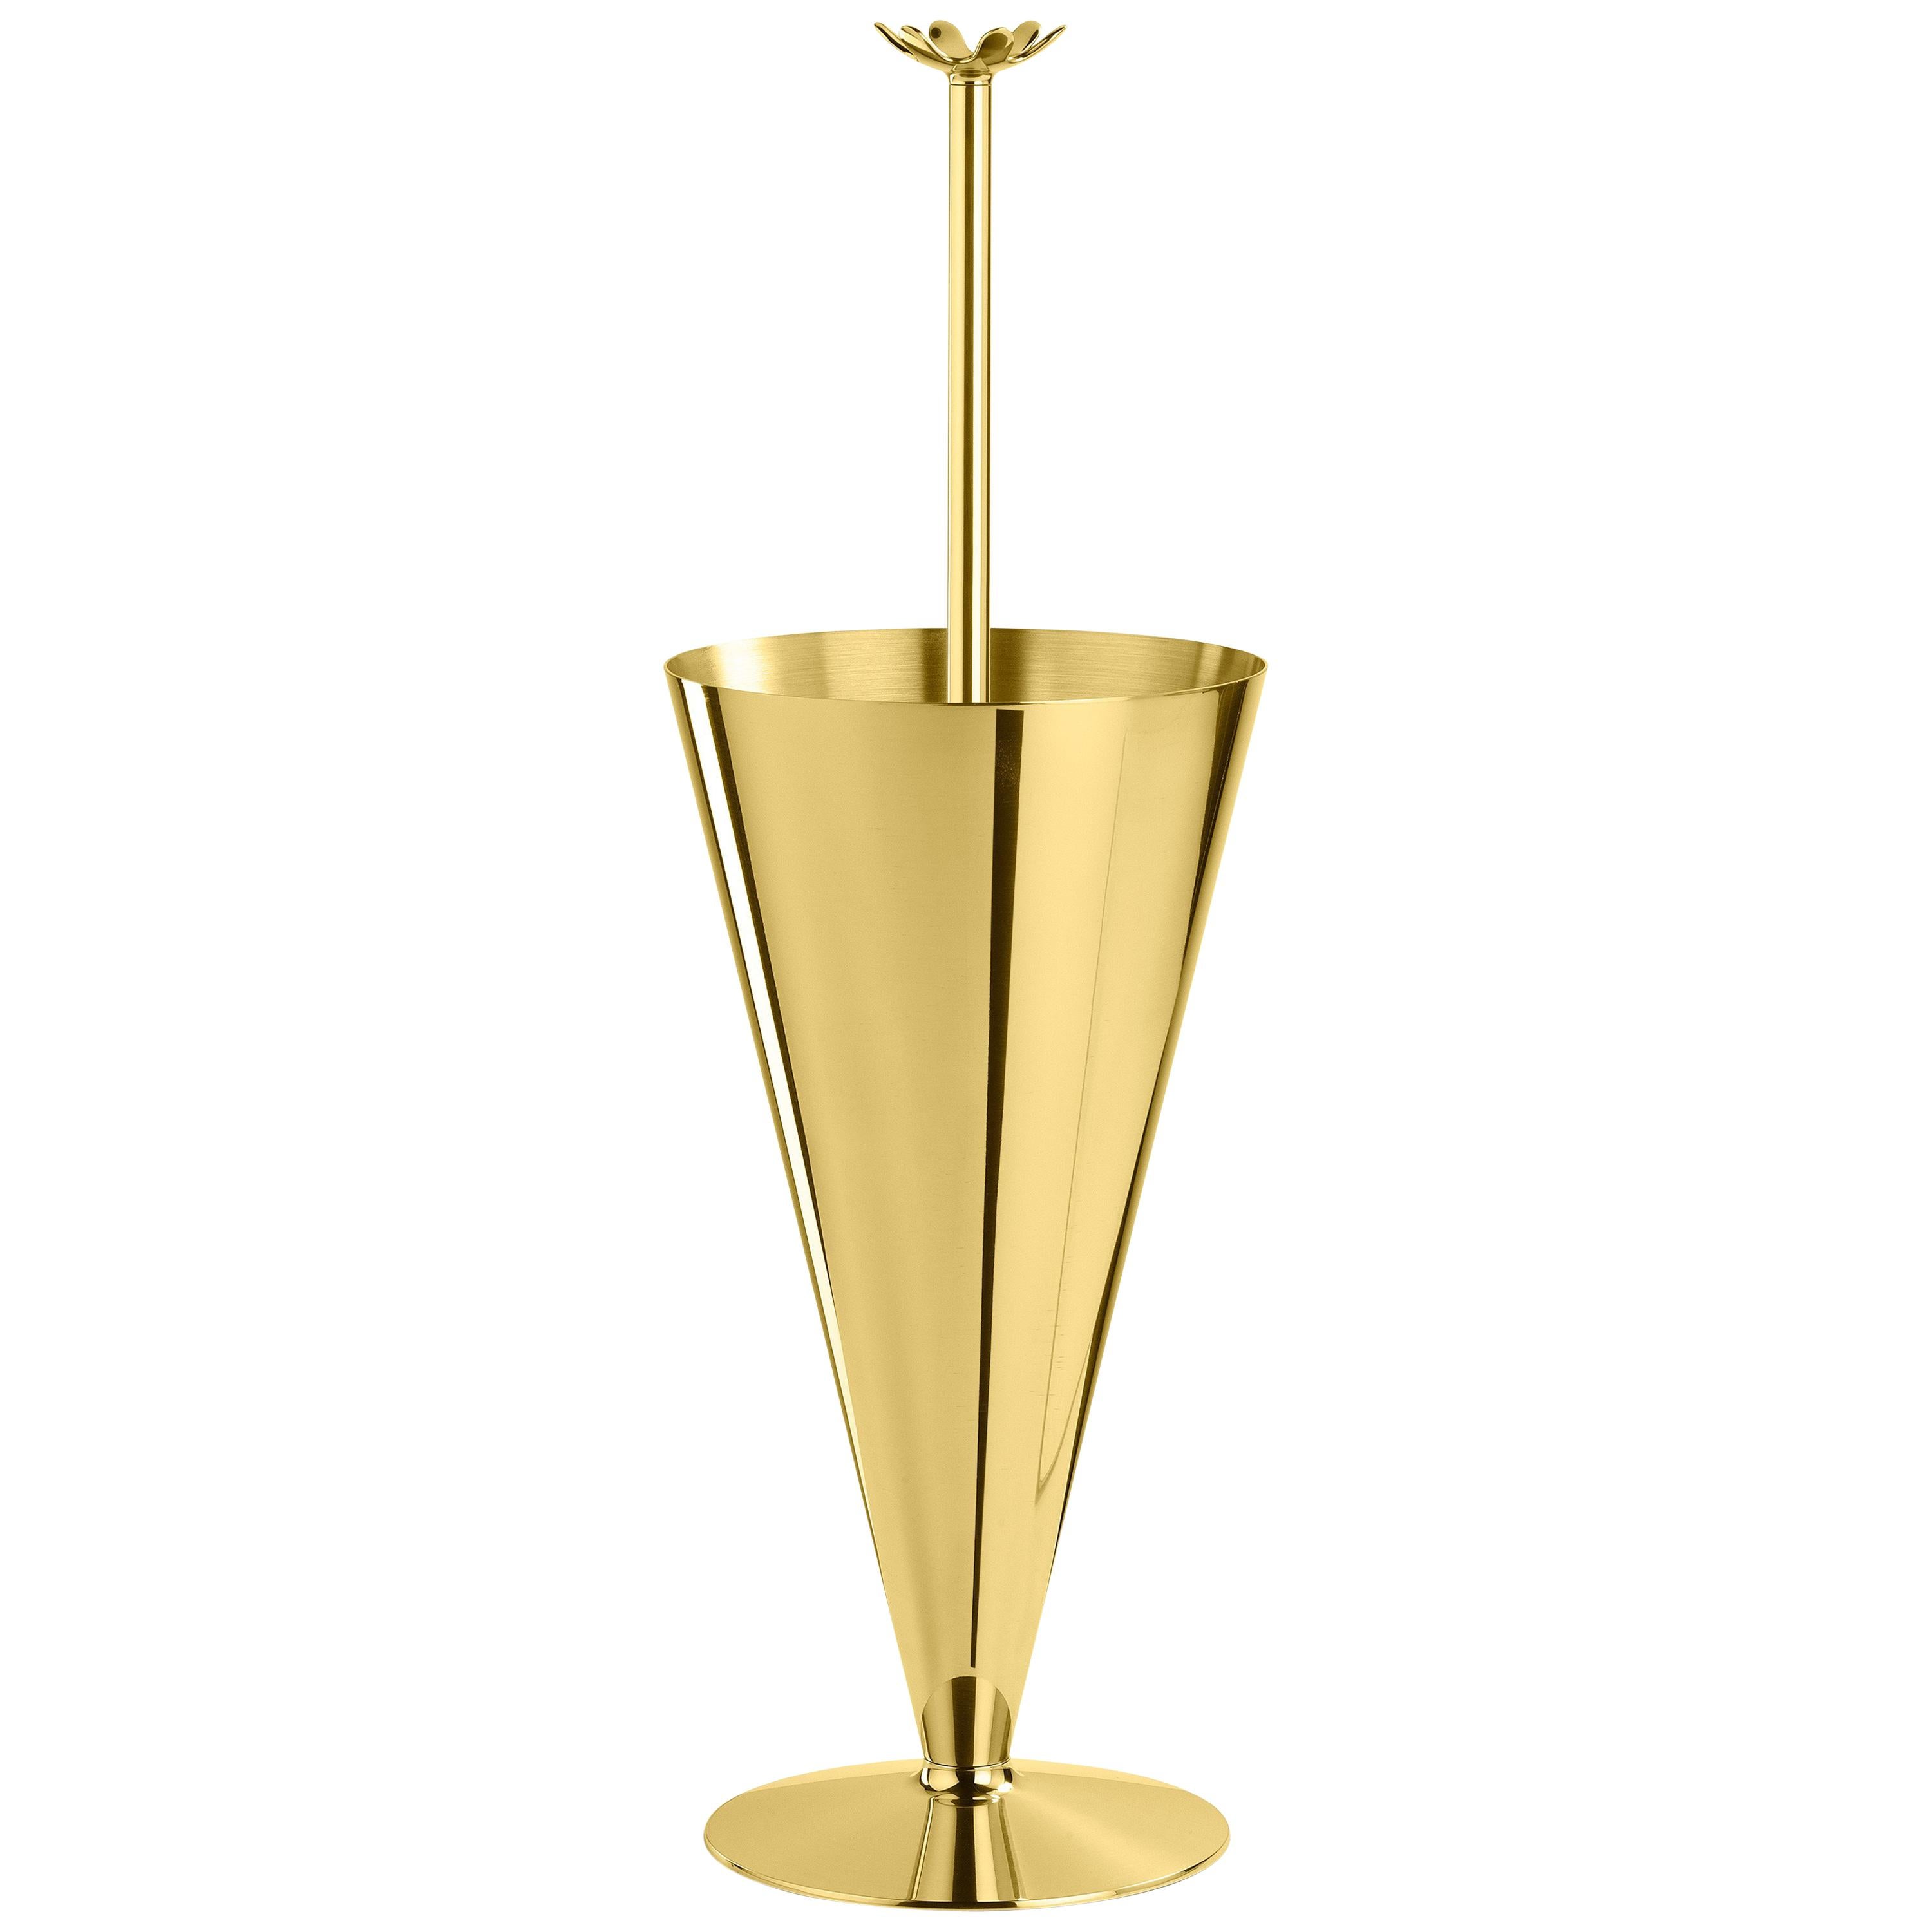 Ghidini 1961 Butler Umbrella Stand in Glossy Brass by Richard Hutten